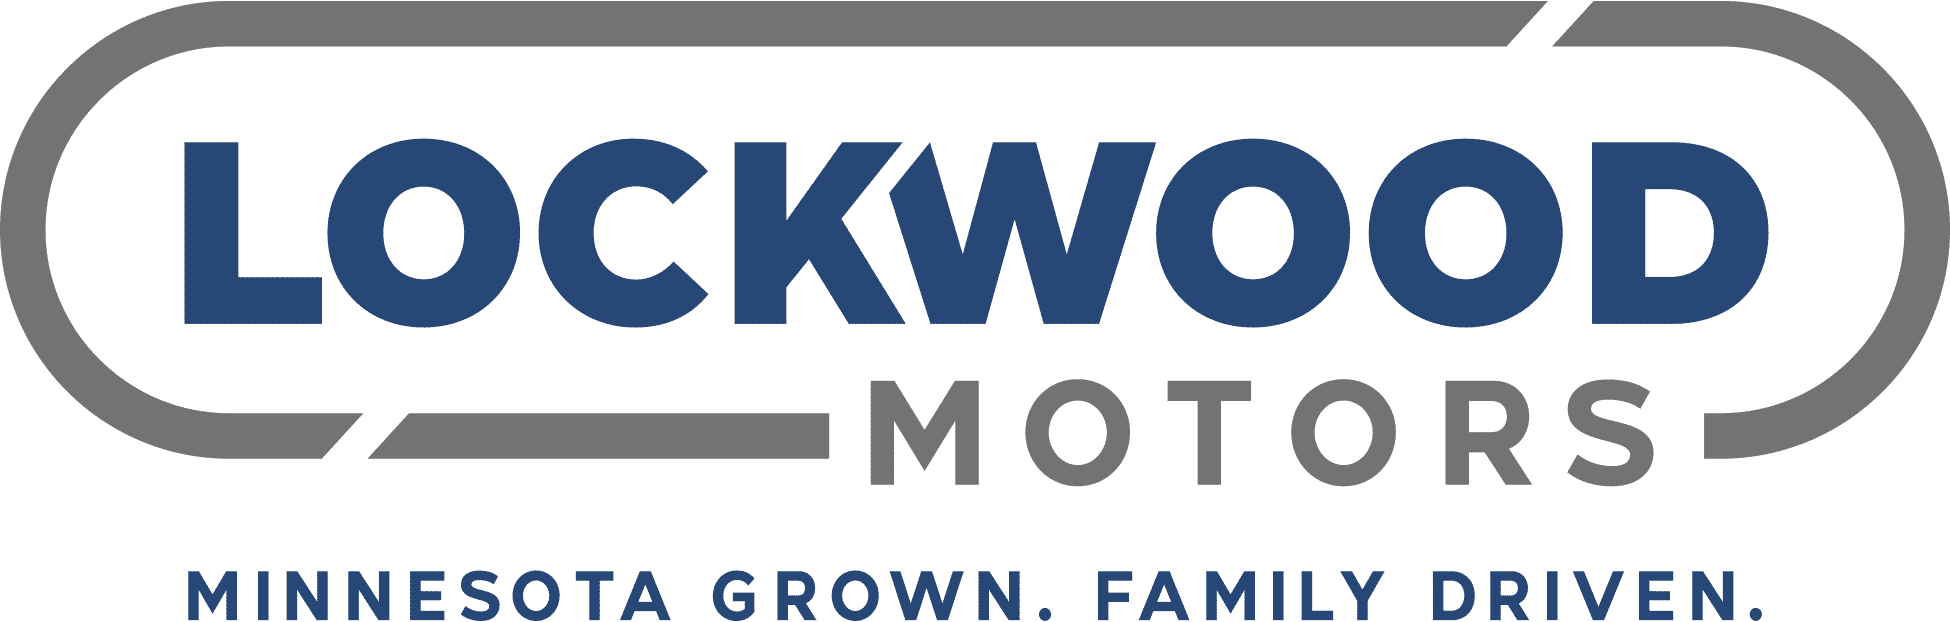 Lockwood logo